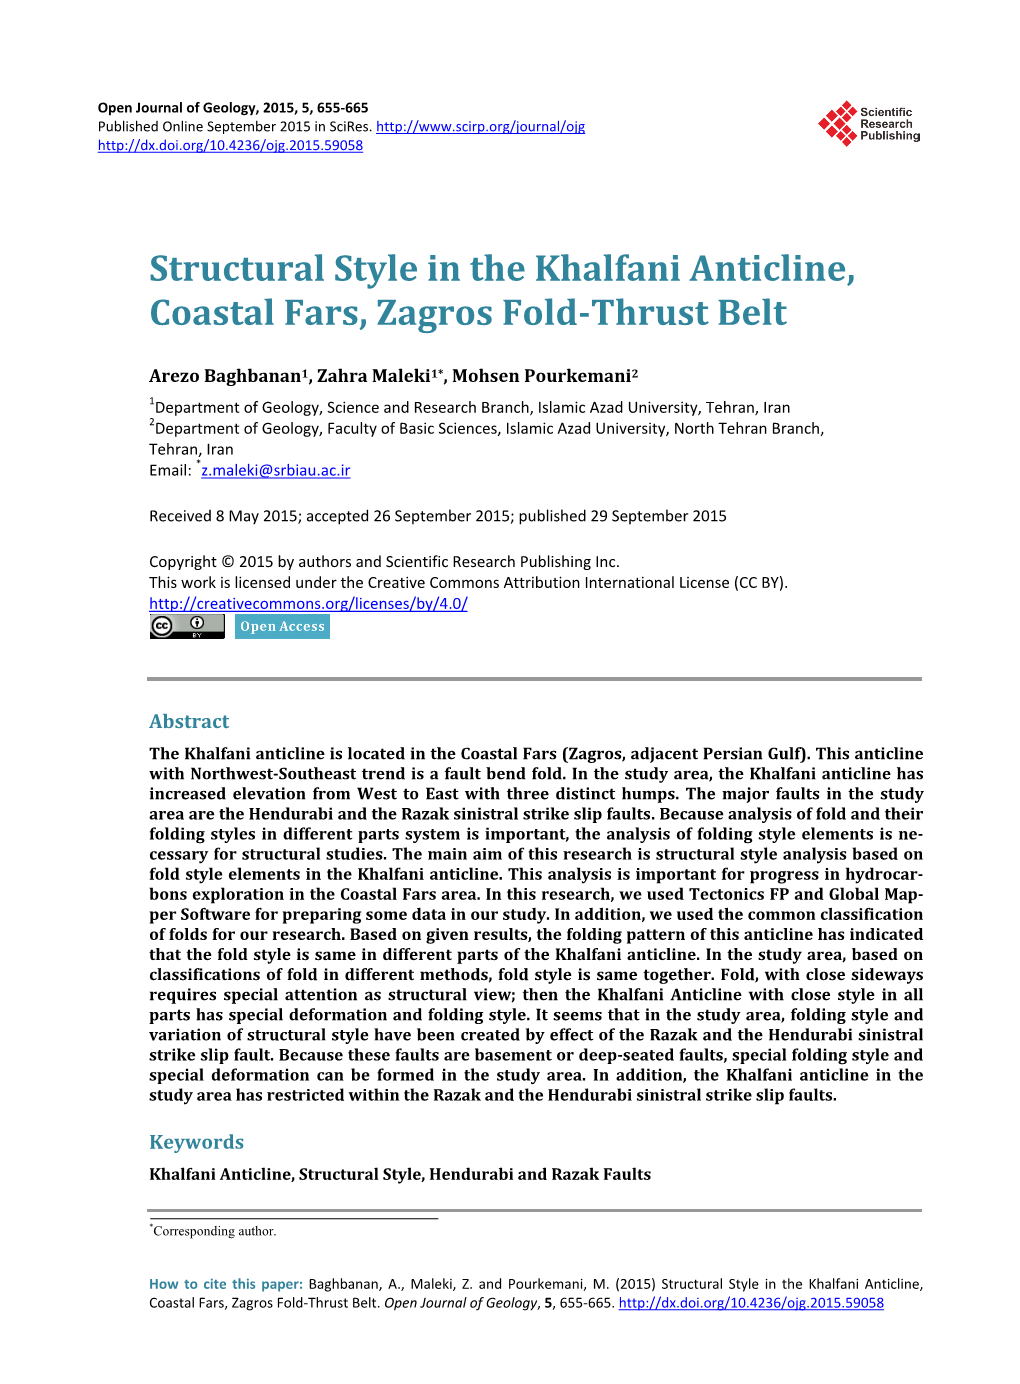 Structural Style in the Khalfani Anticline, Coastal Fars, Zagros Fold-Thrust Belt